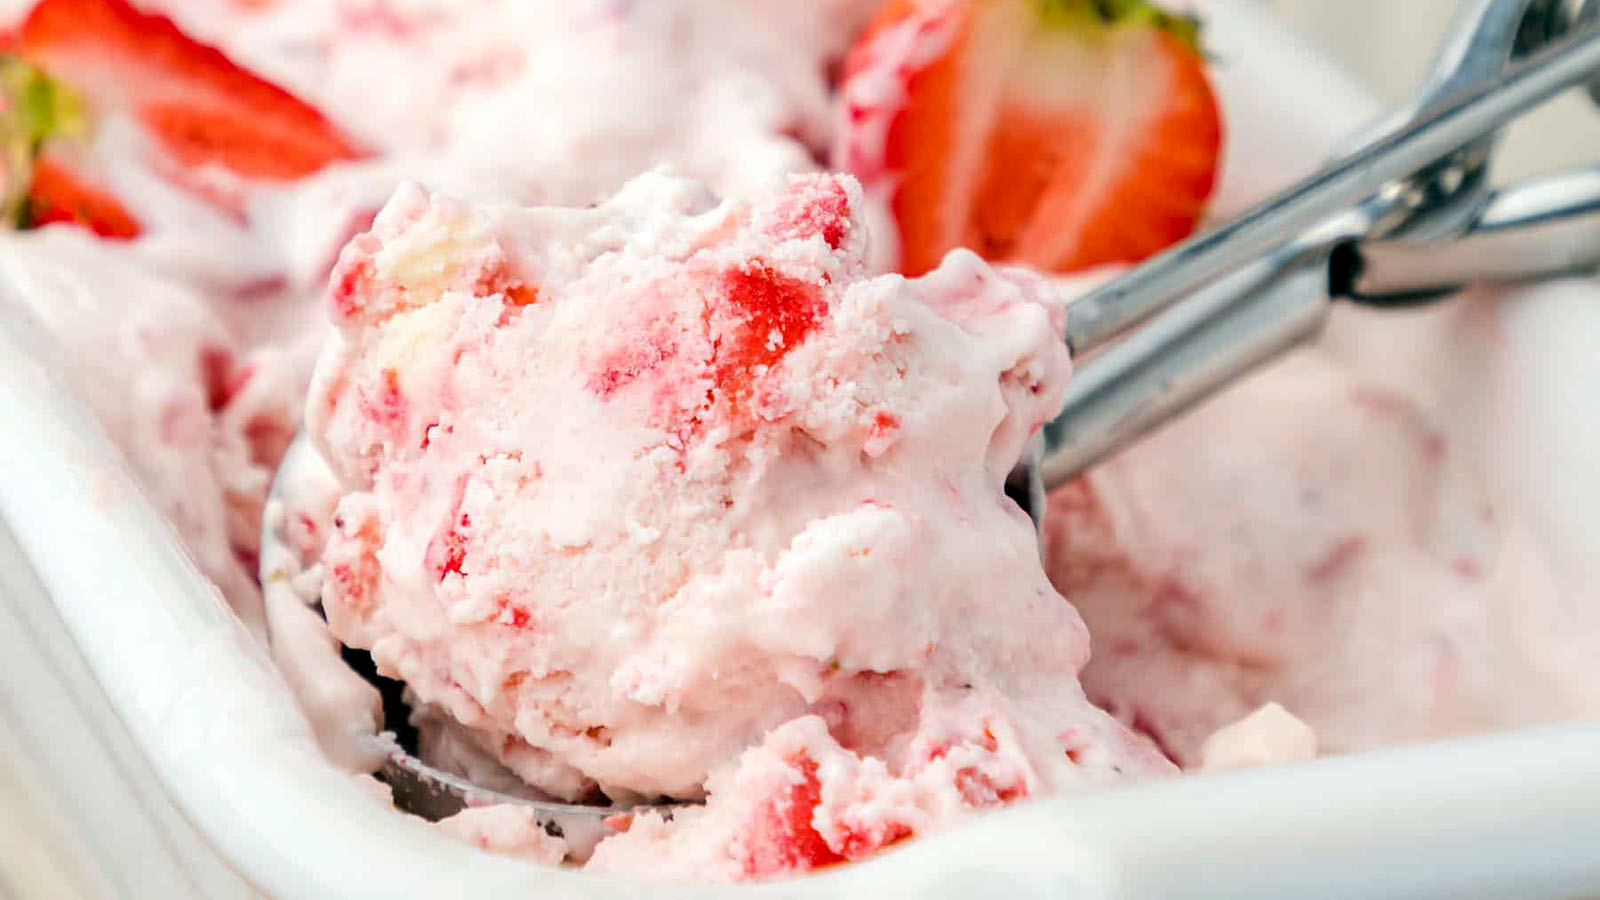 vanilla ice cream with strawberries